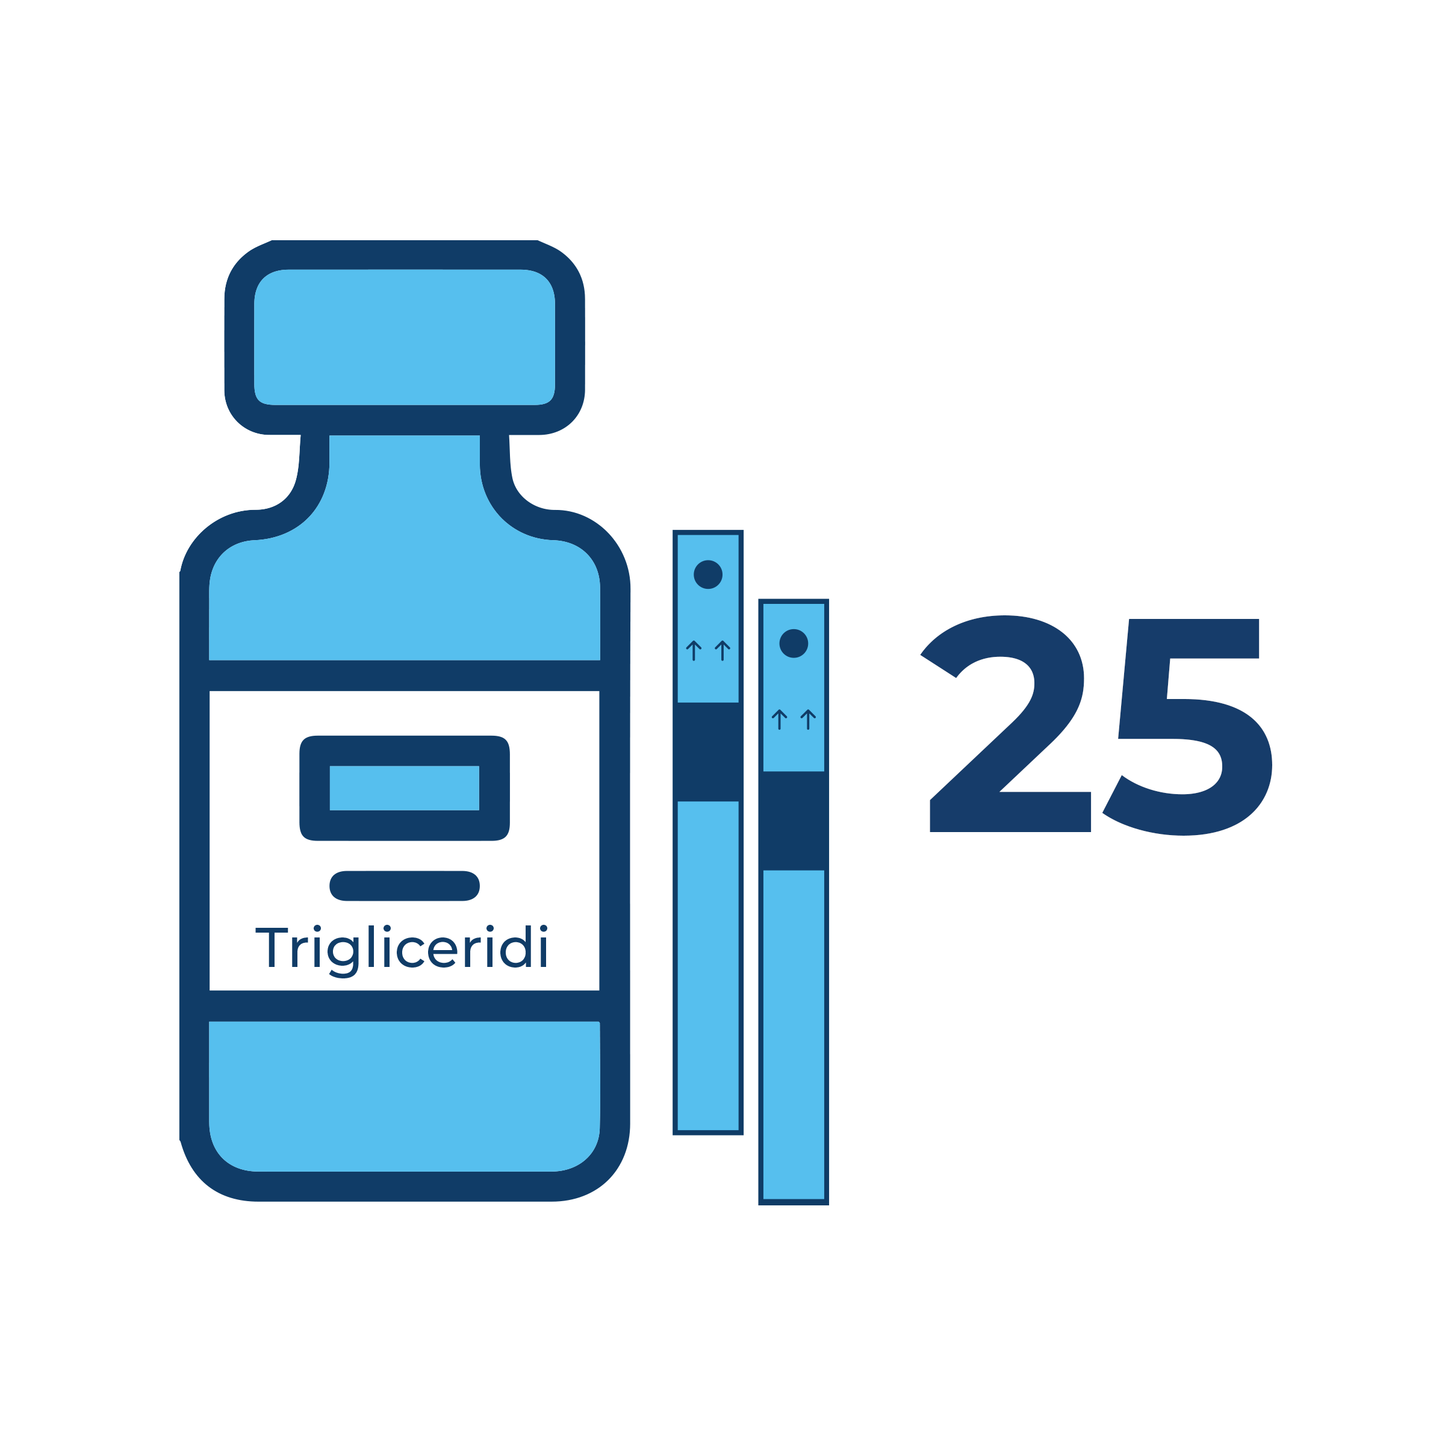 25 strisce reagenti per trigliceridi